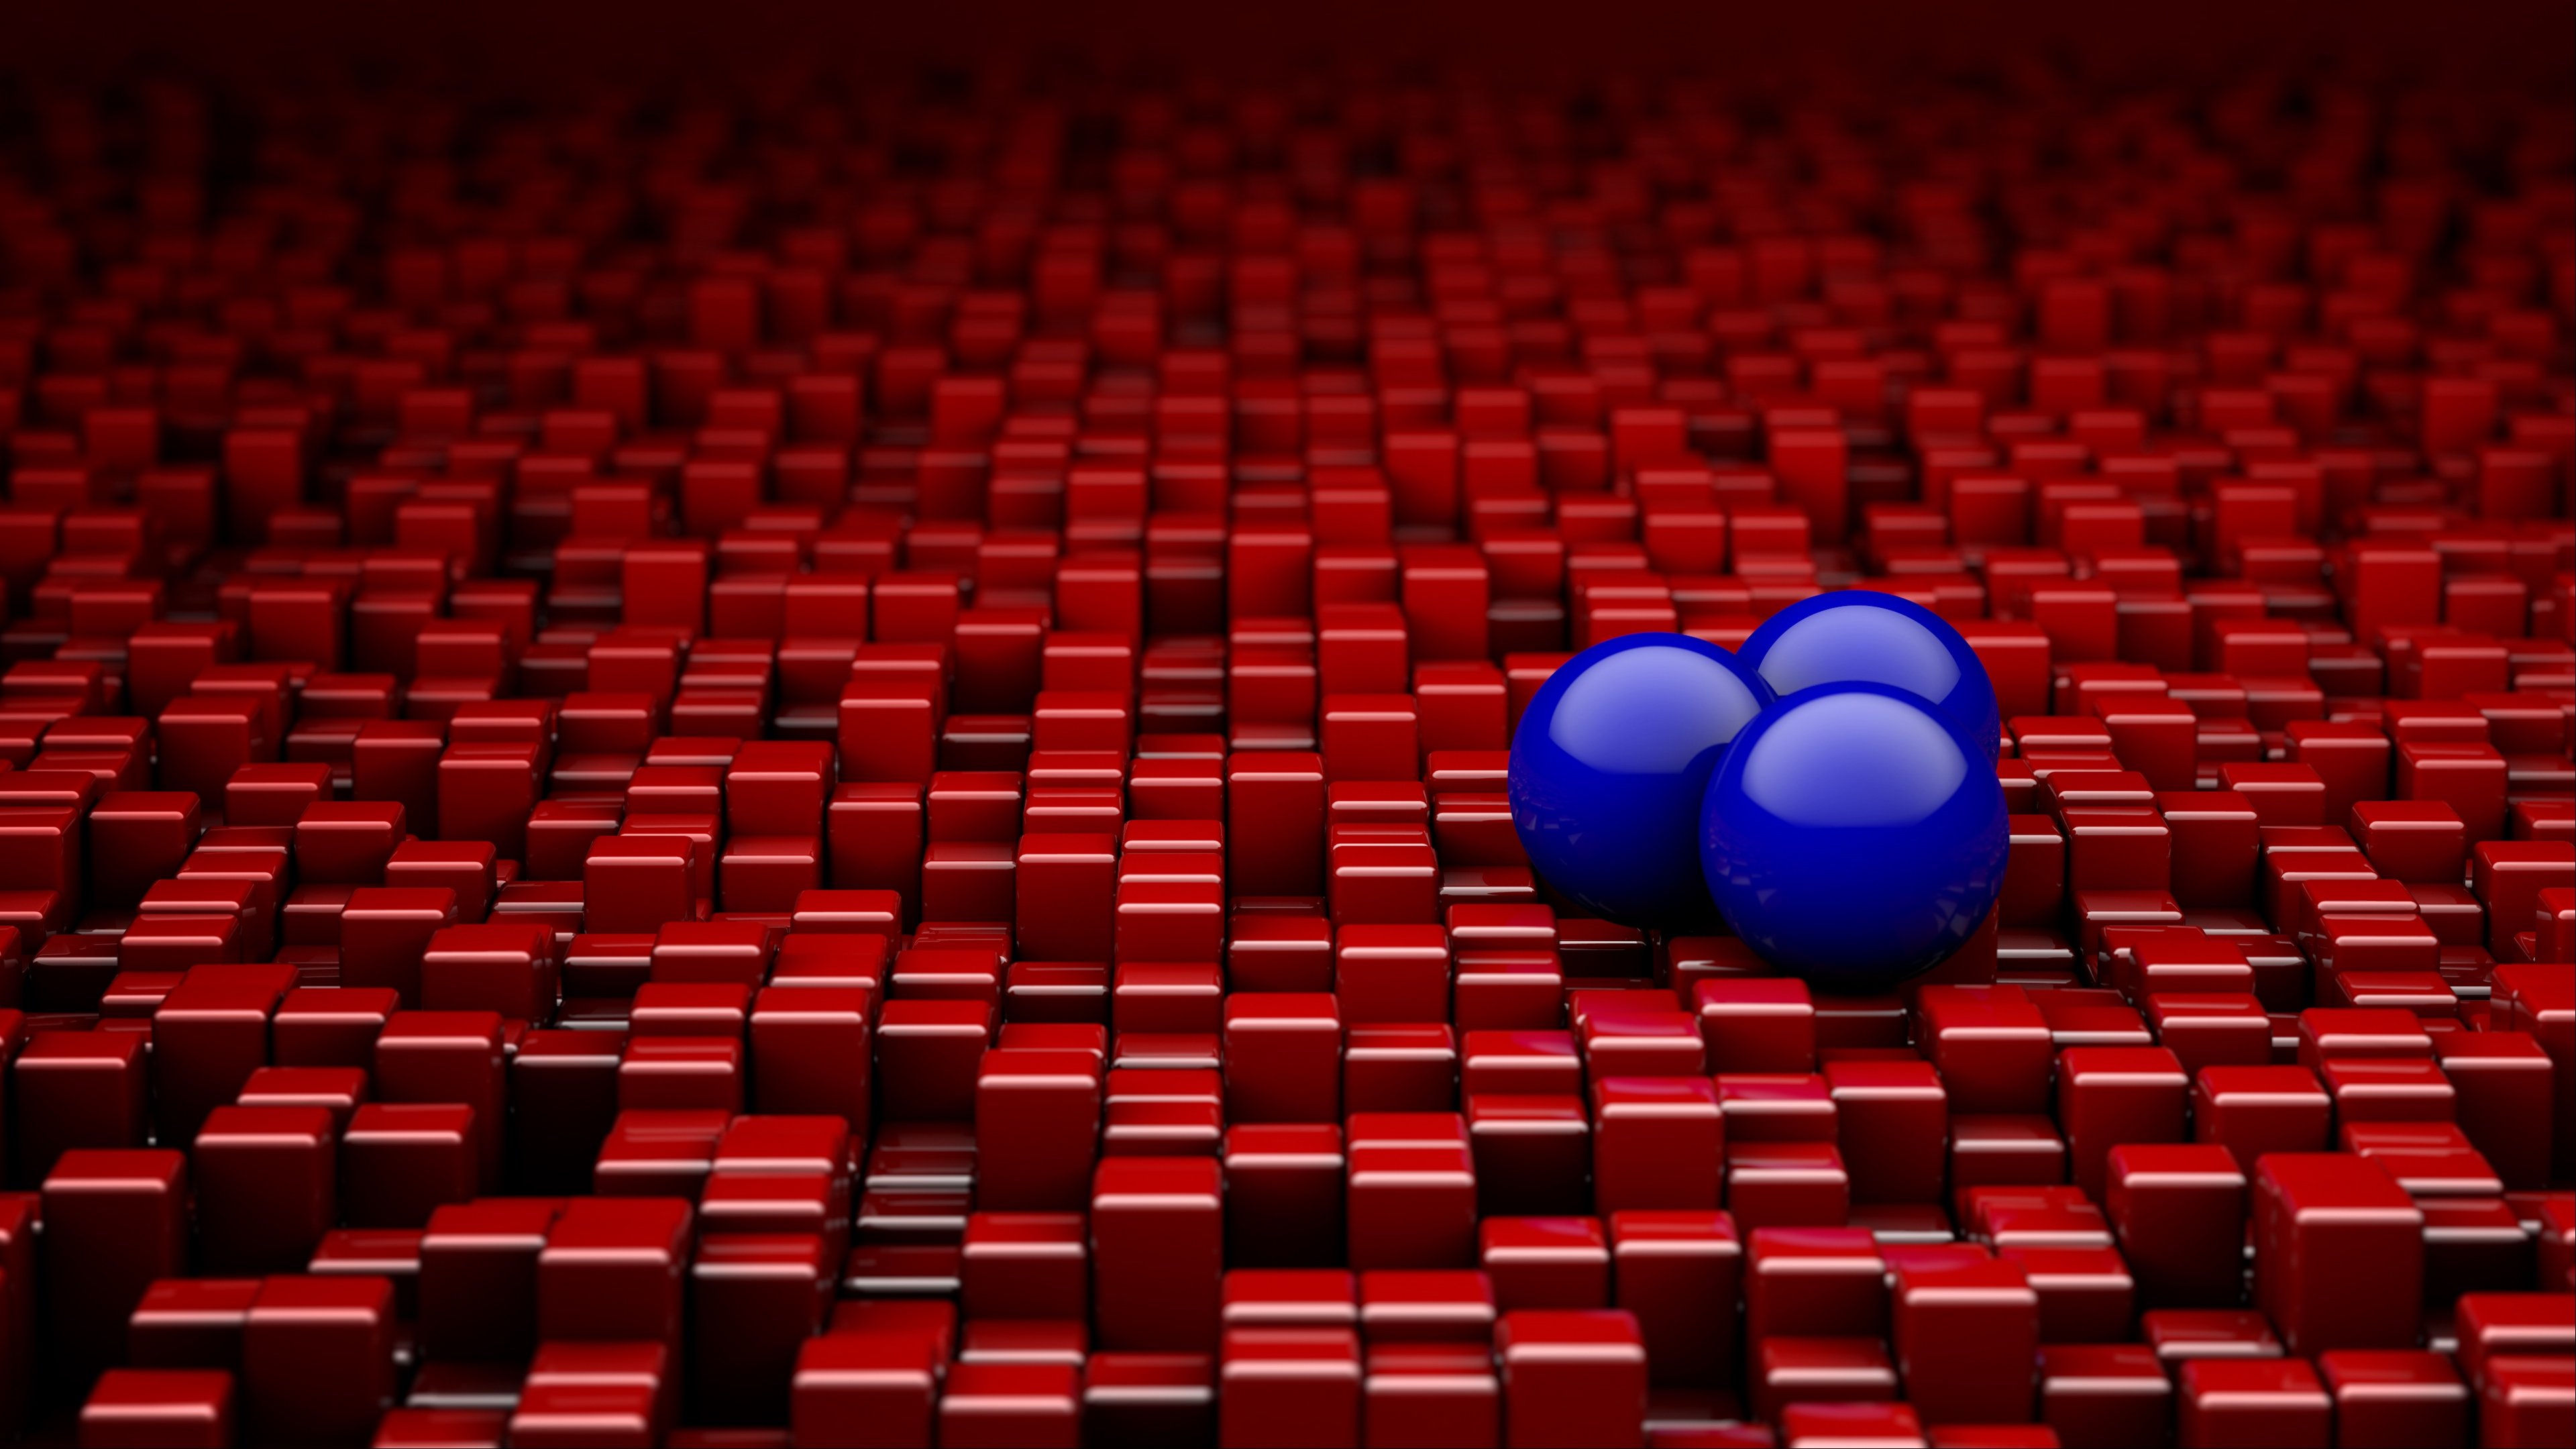 Download wallpaper 3840x2160 balls, cubes, red, blue, rendering 4k